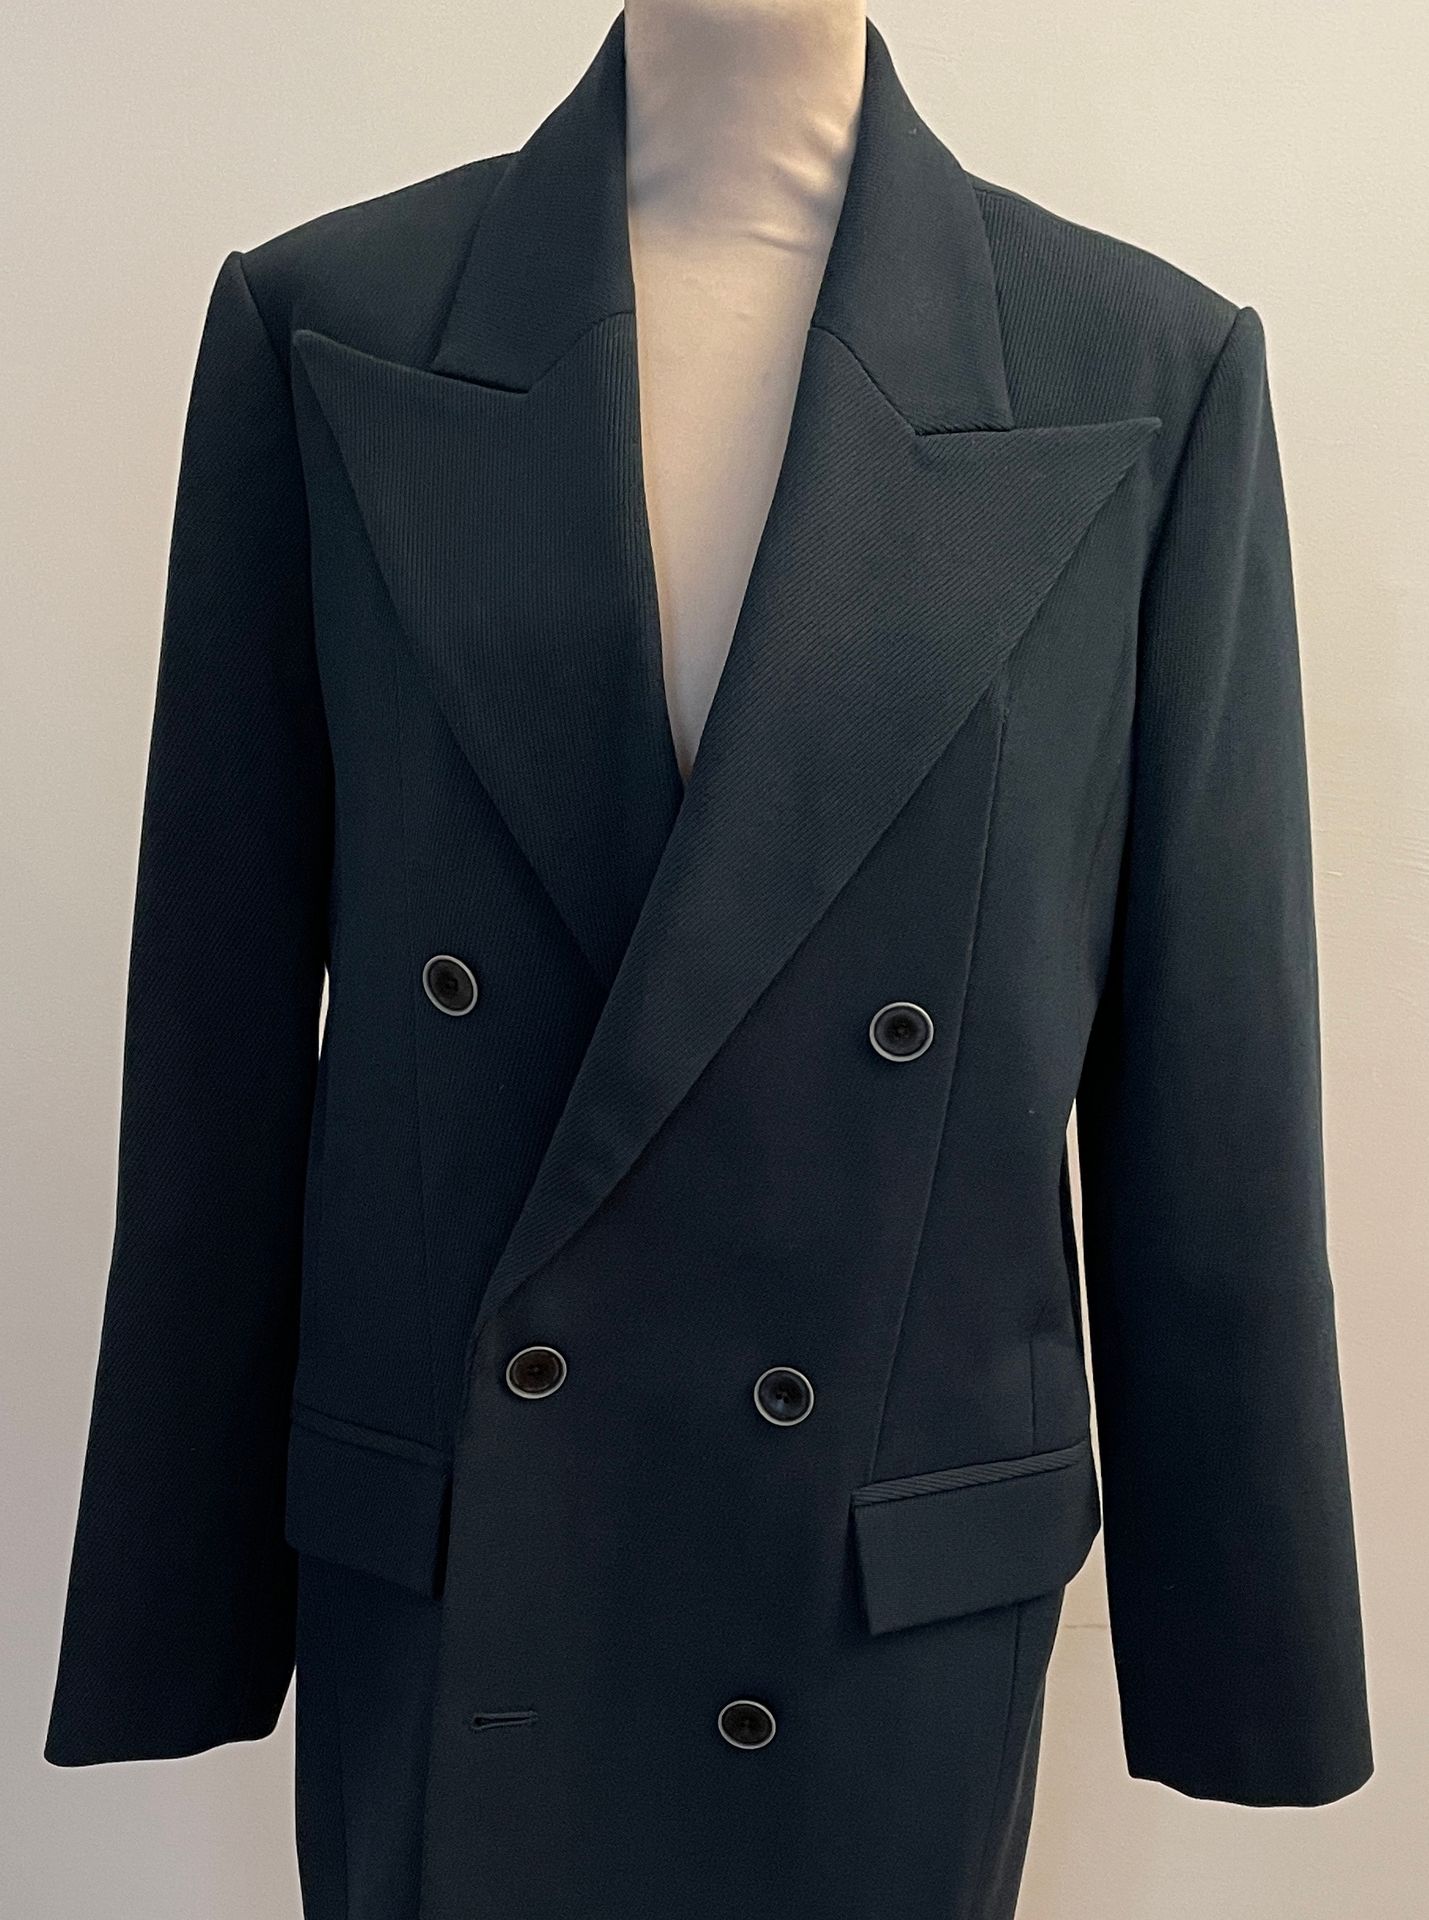 Null 必要性意义

深绿色羊毛男式长外套。

S.M

肩宽42厘米，袖长62厘米，衣领至衣底长度114厘米

带标签，售价1400欧元。